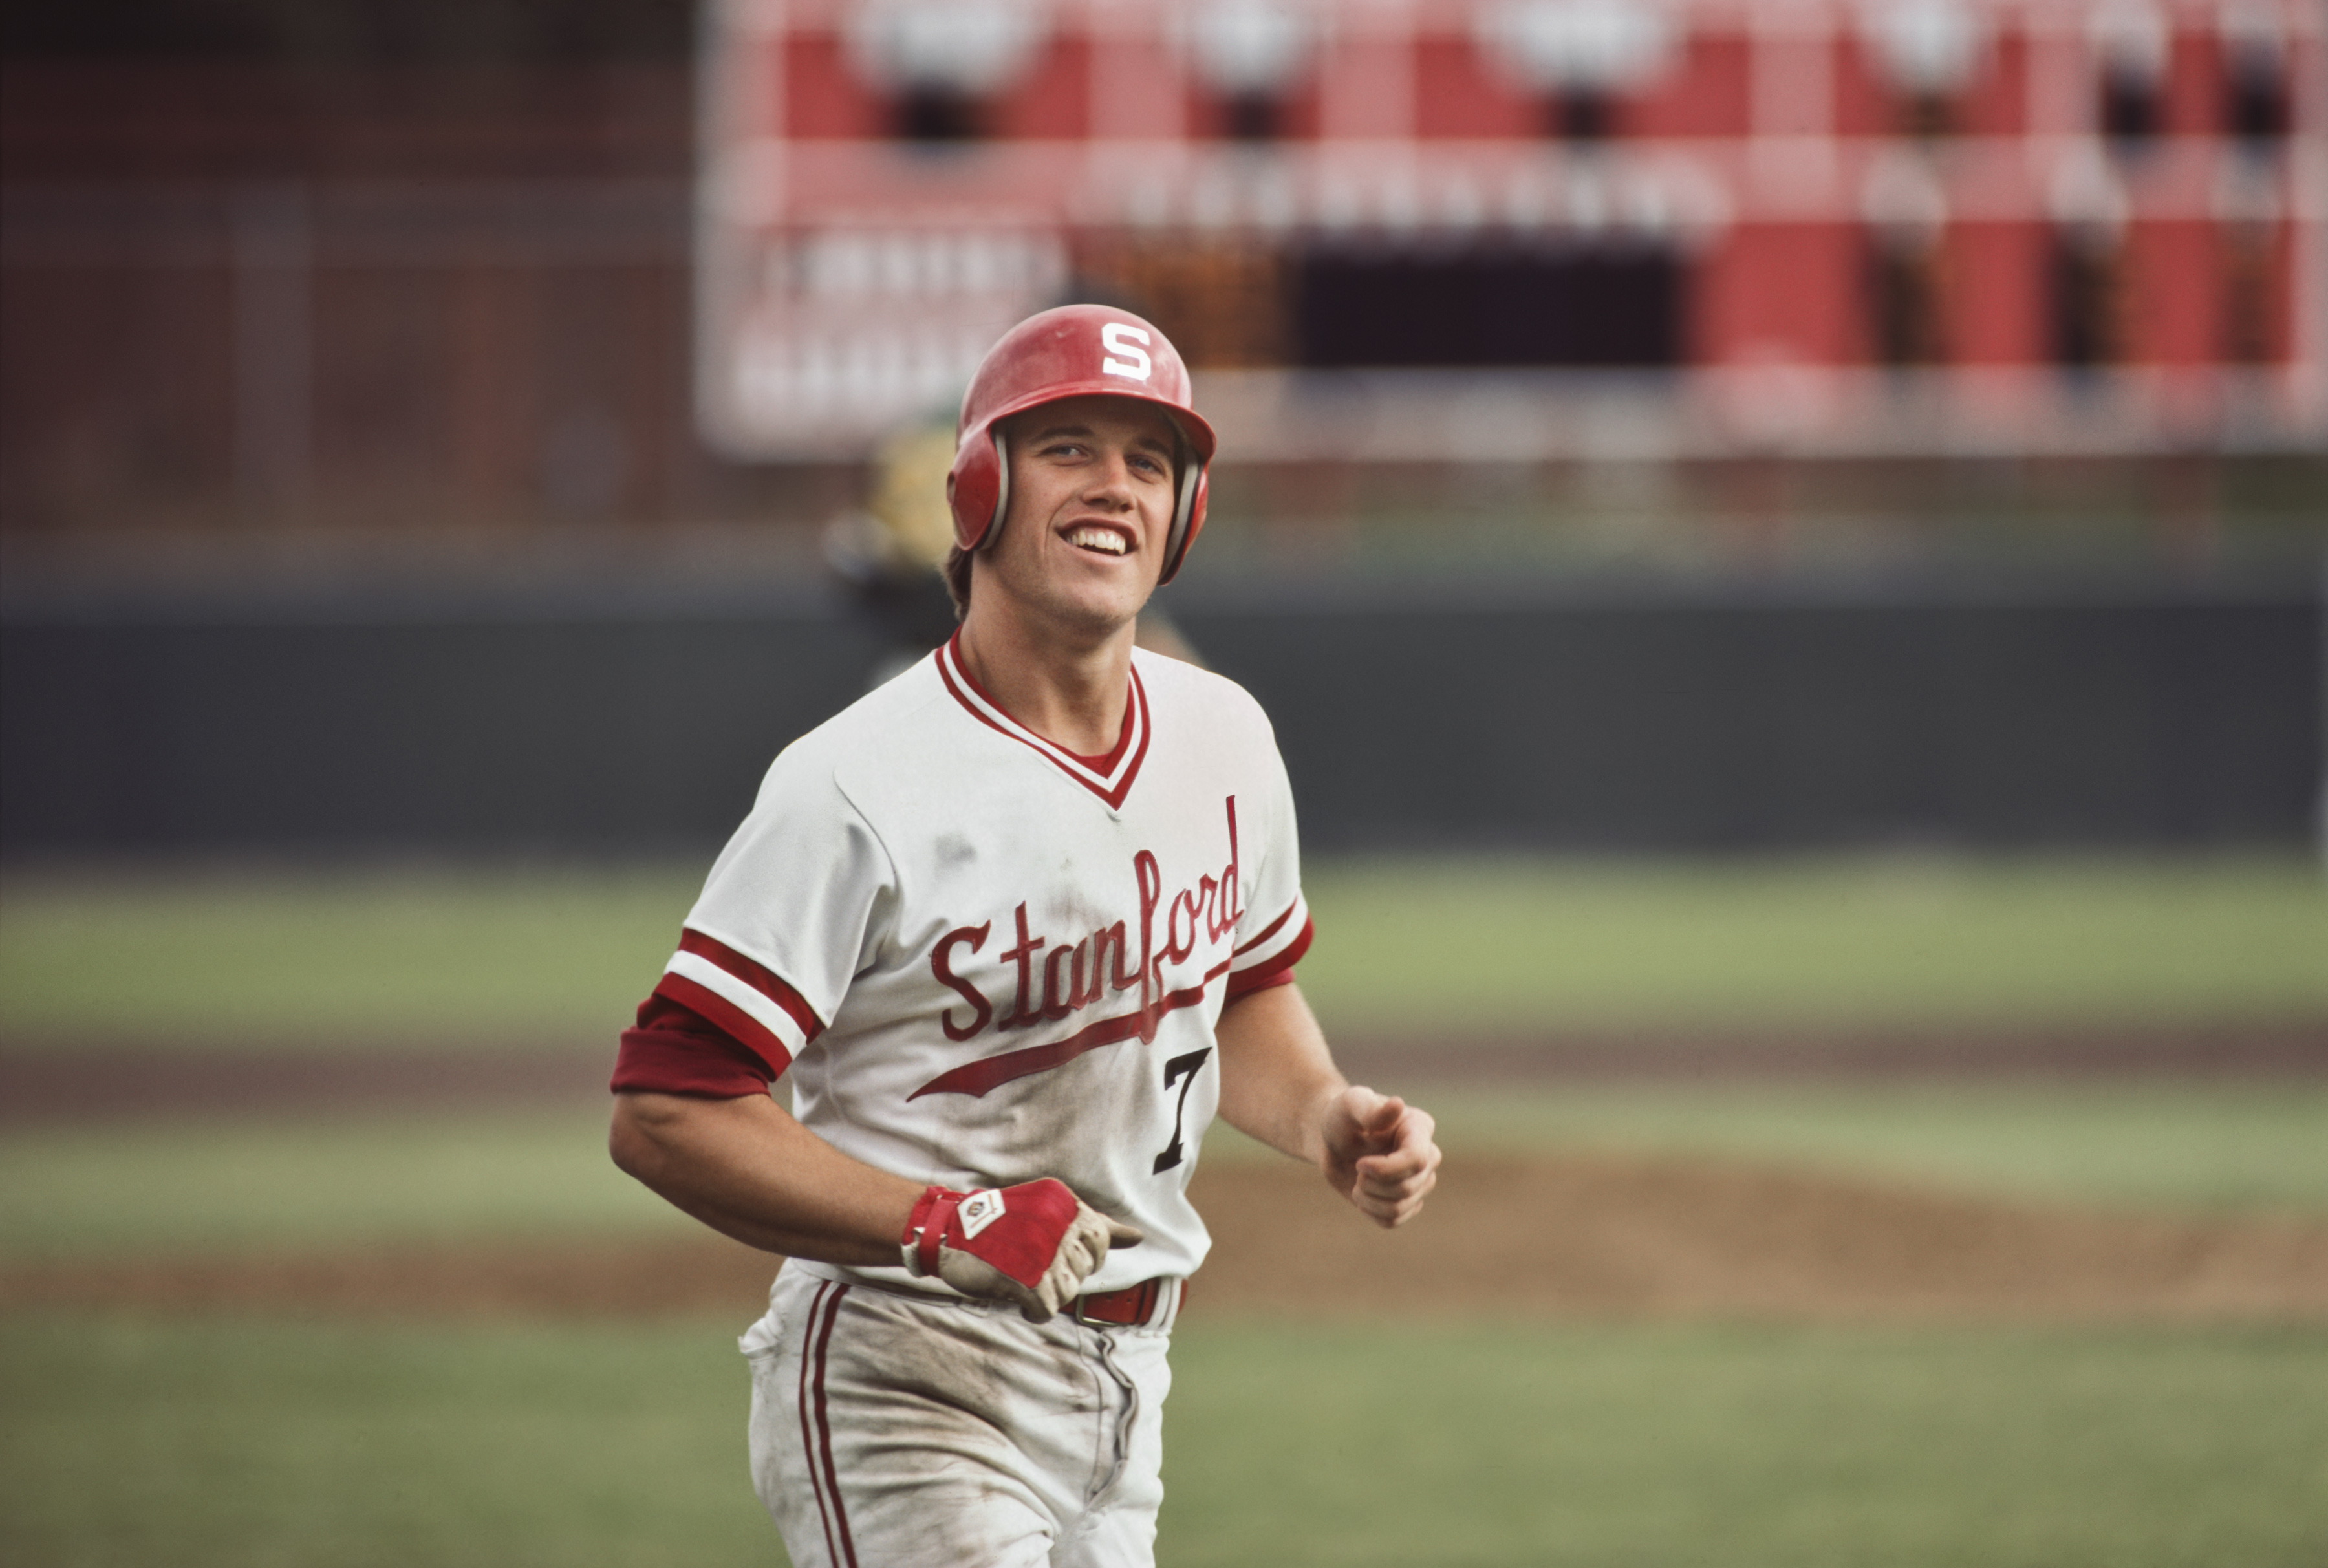 Jordan, Elway among stars who tried baseball